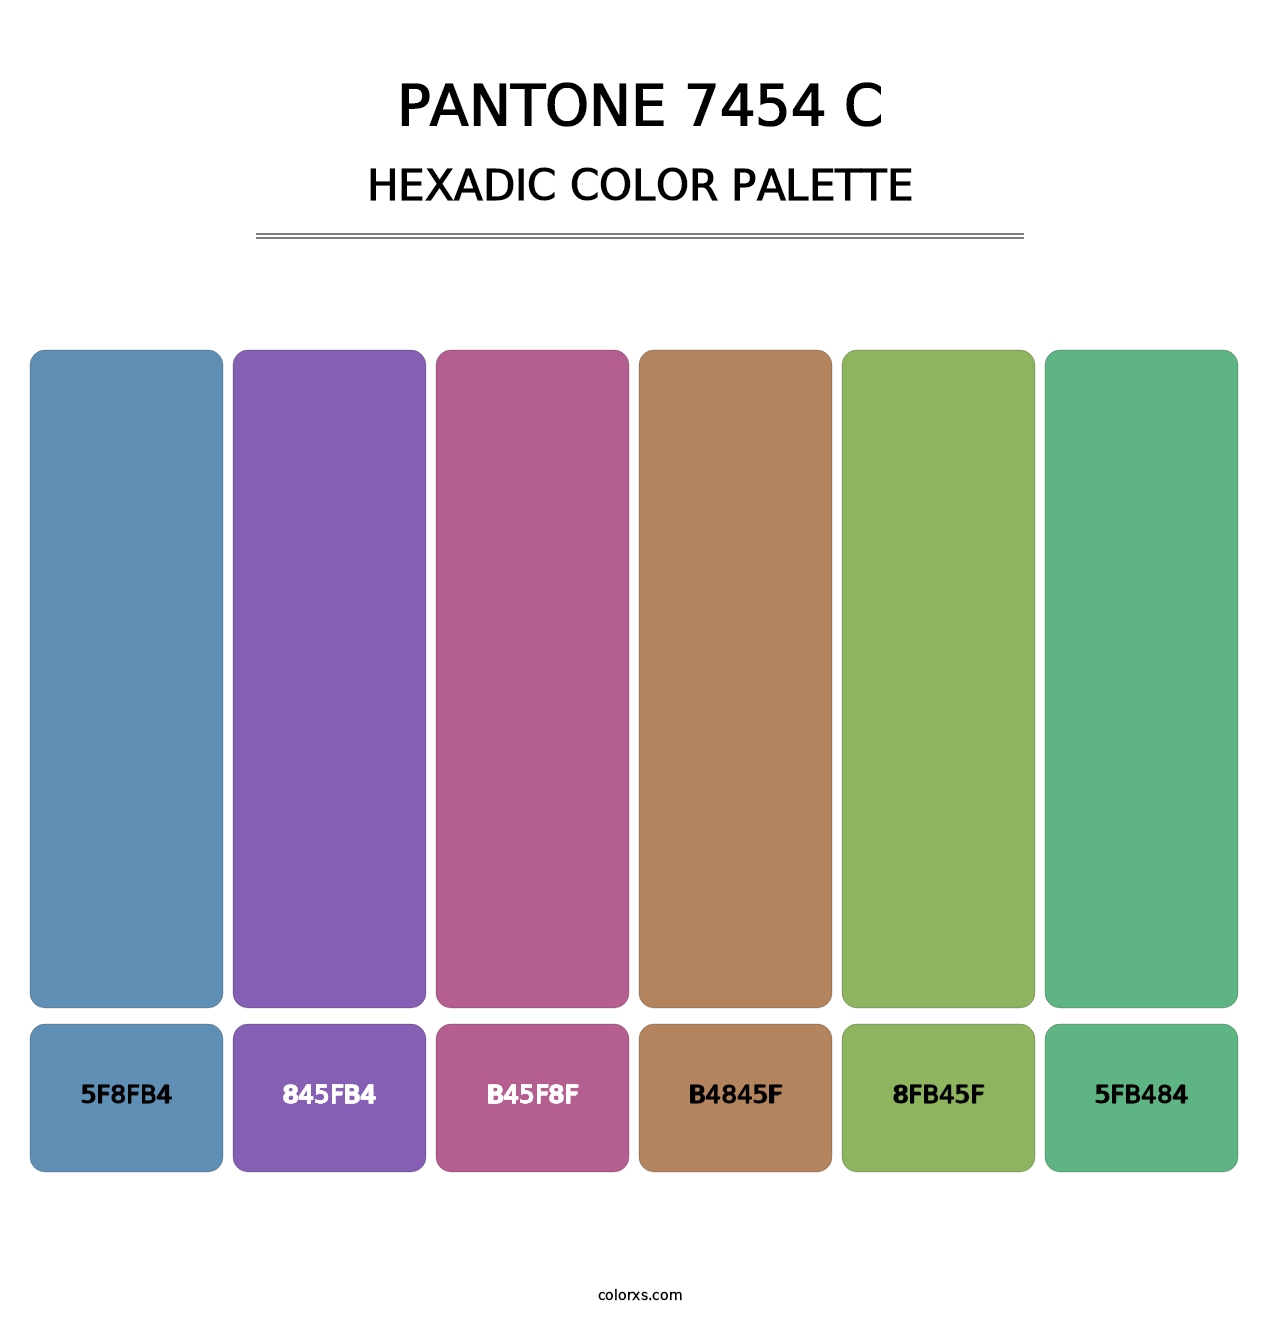 PANTONE 7454 C - Hexadic Color Palette